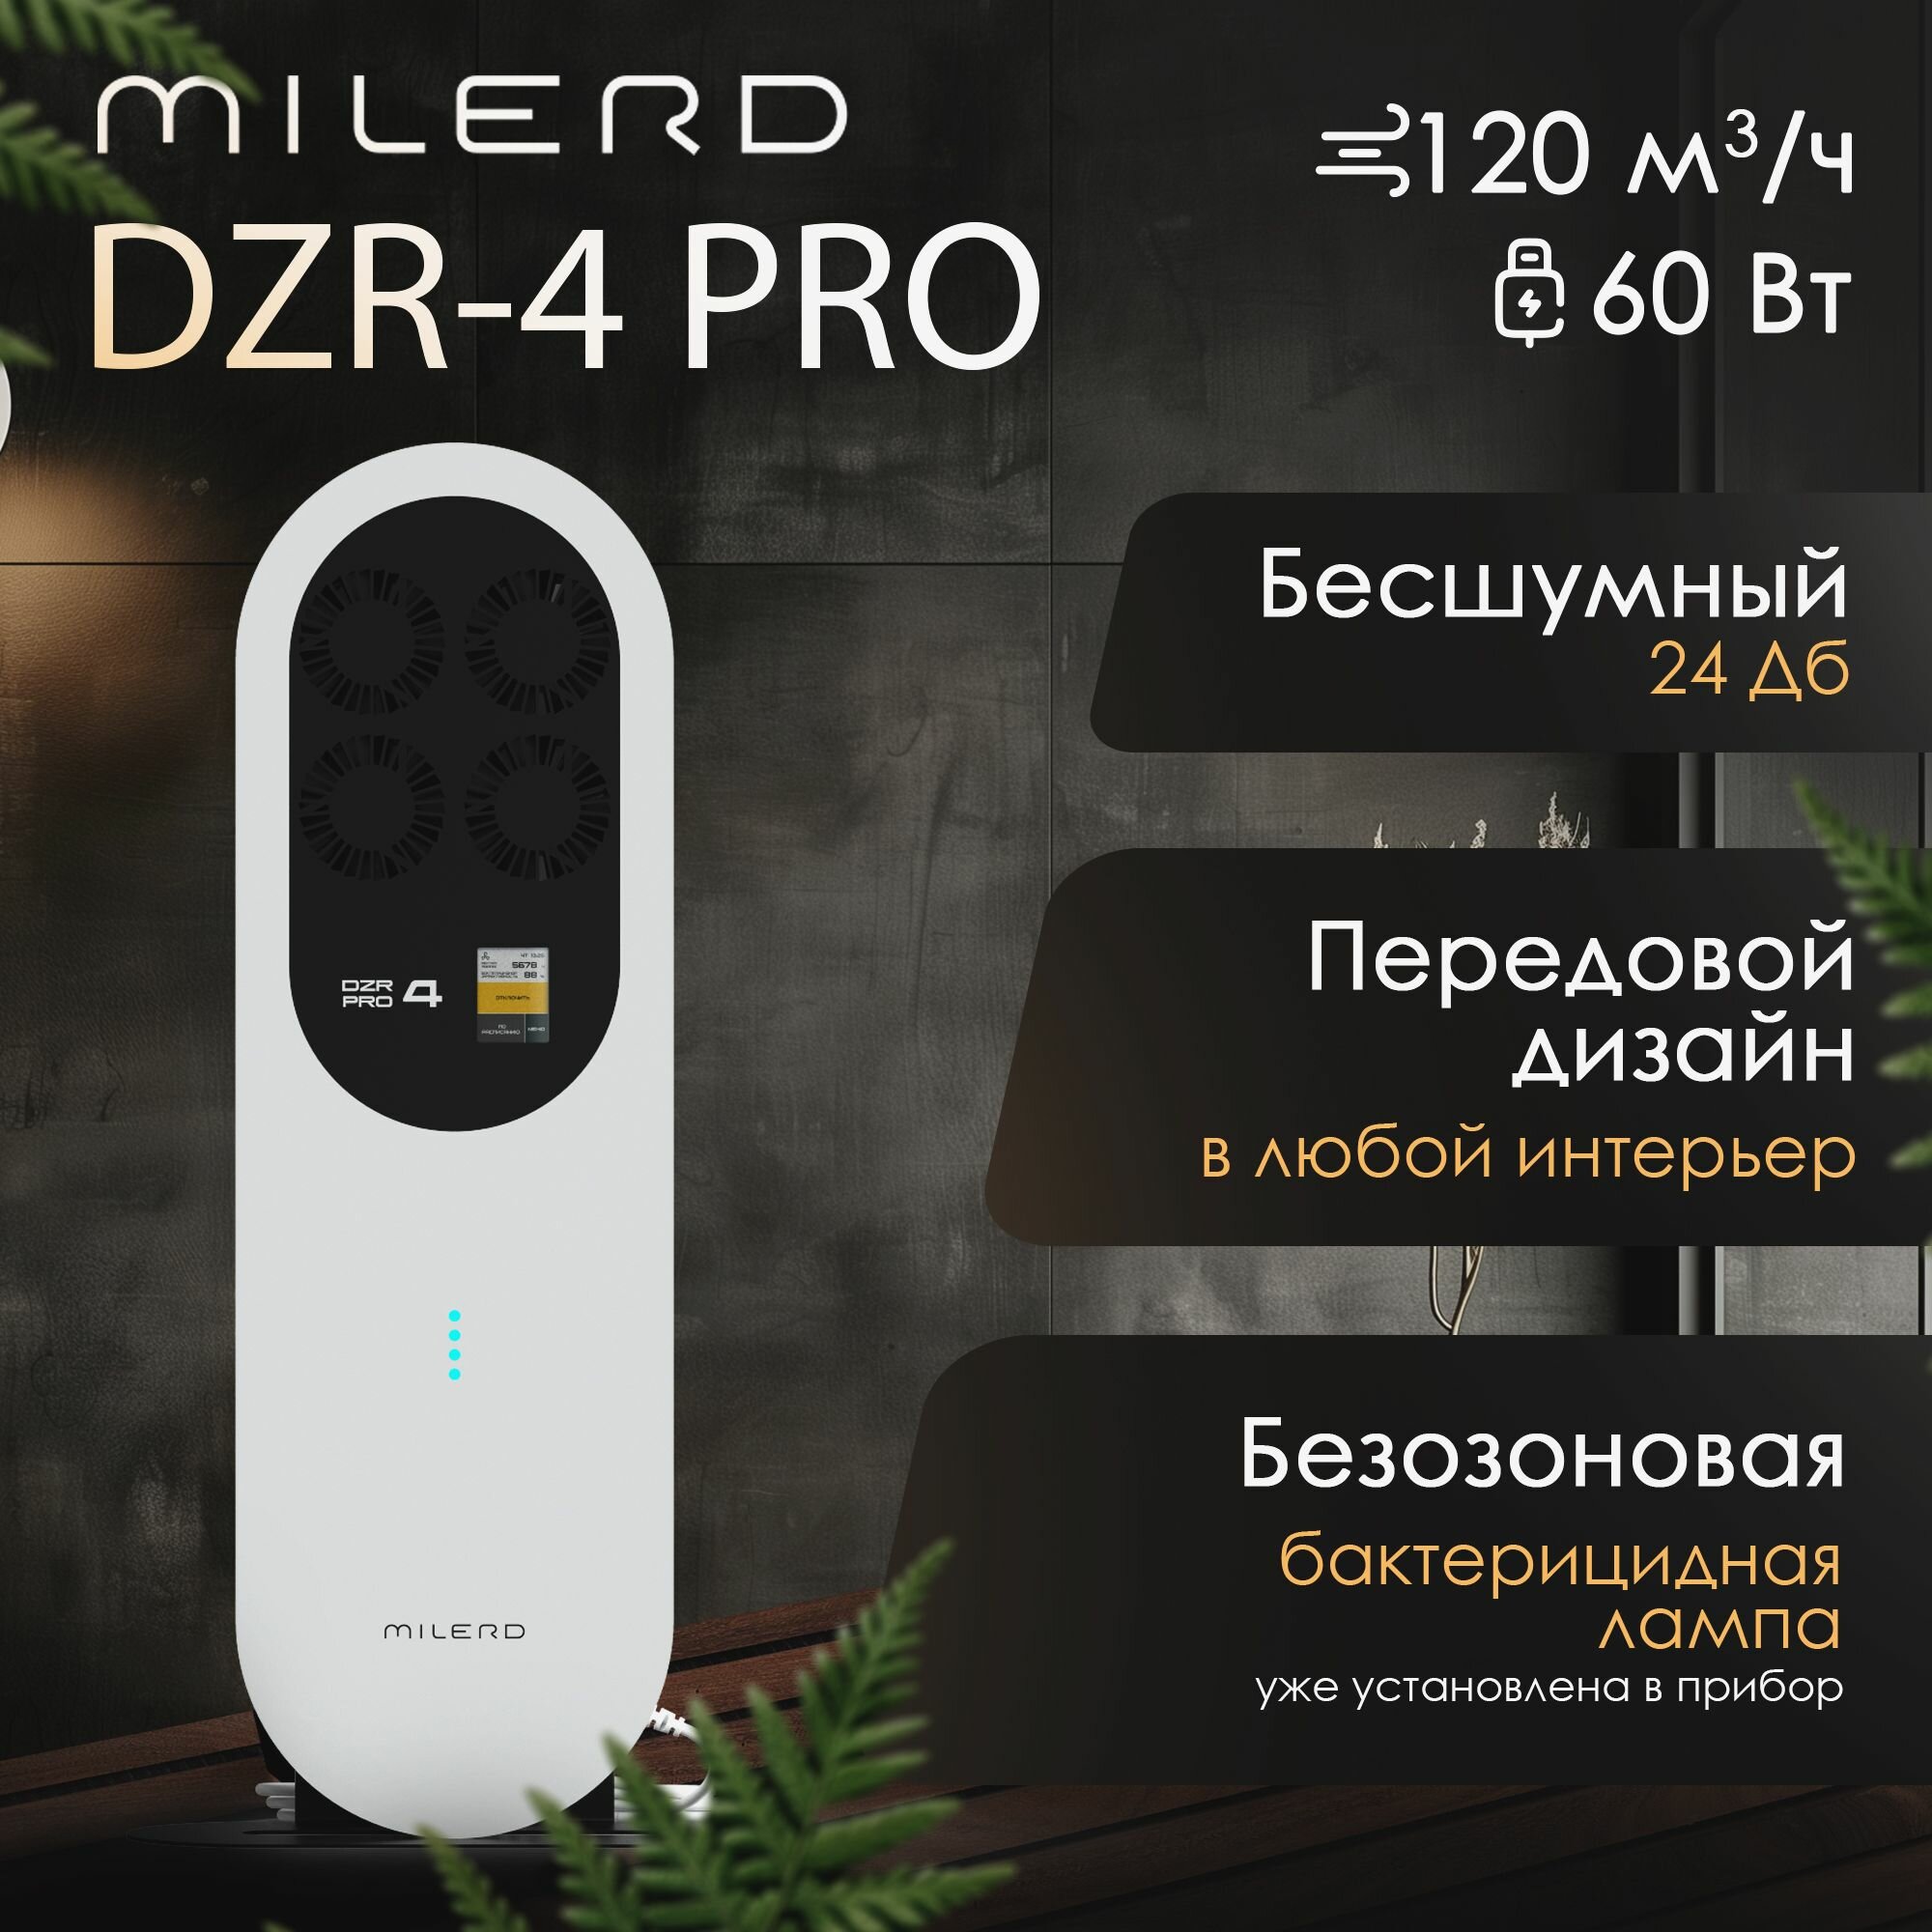 УФ-рециркулятор Milerd DZR-3 Pro закрытого типа